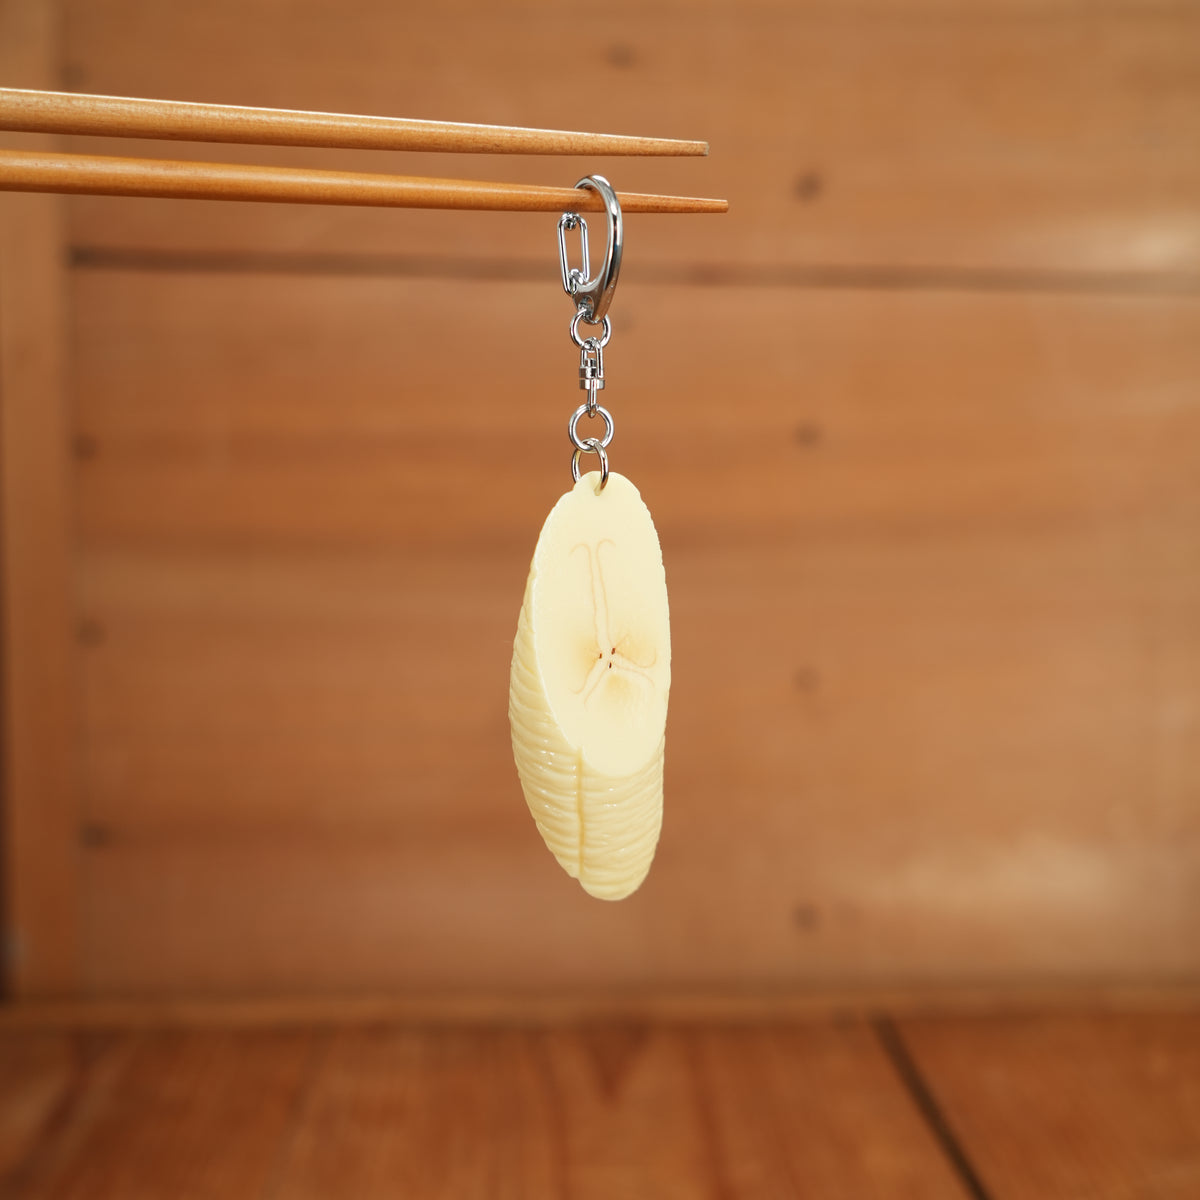 Japanese Specialty Imitation Food Keychain